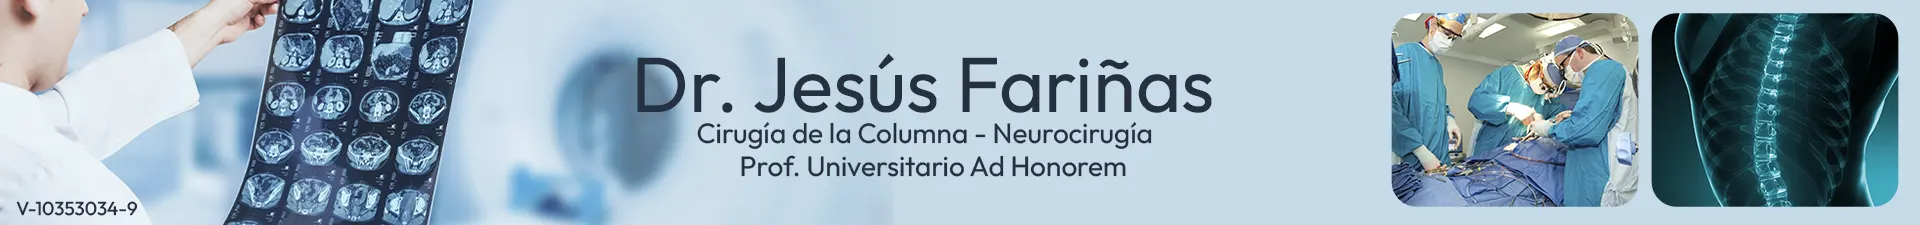 Imagen 1 del perfil de Dr. Jesús Fariñas